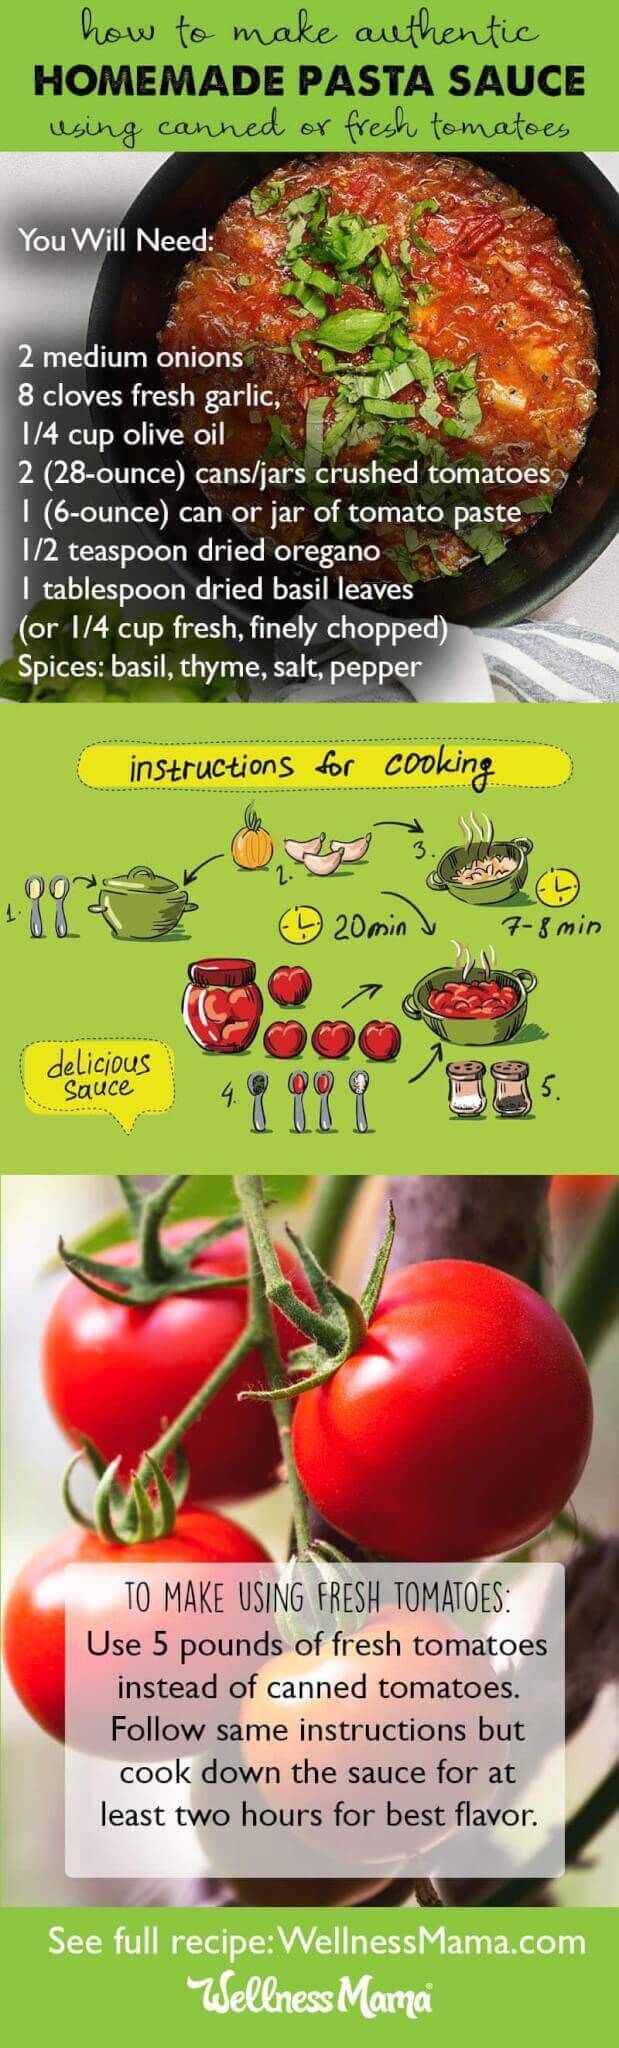 An authentic homemade Italian pasta sauce recipe using fresh tomatoes and herbs.